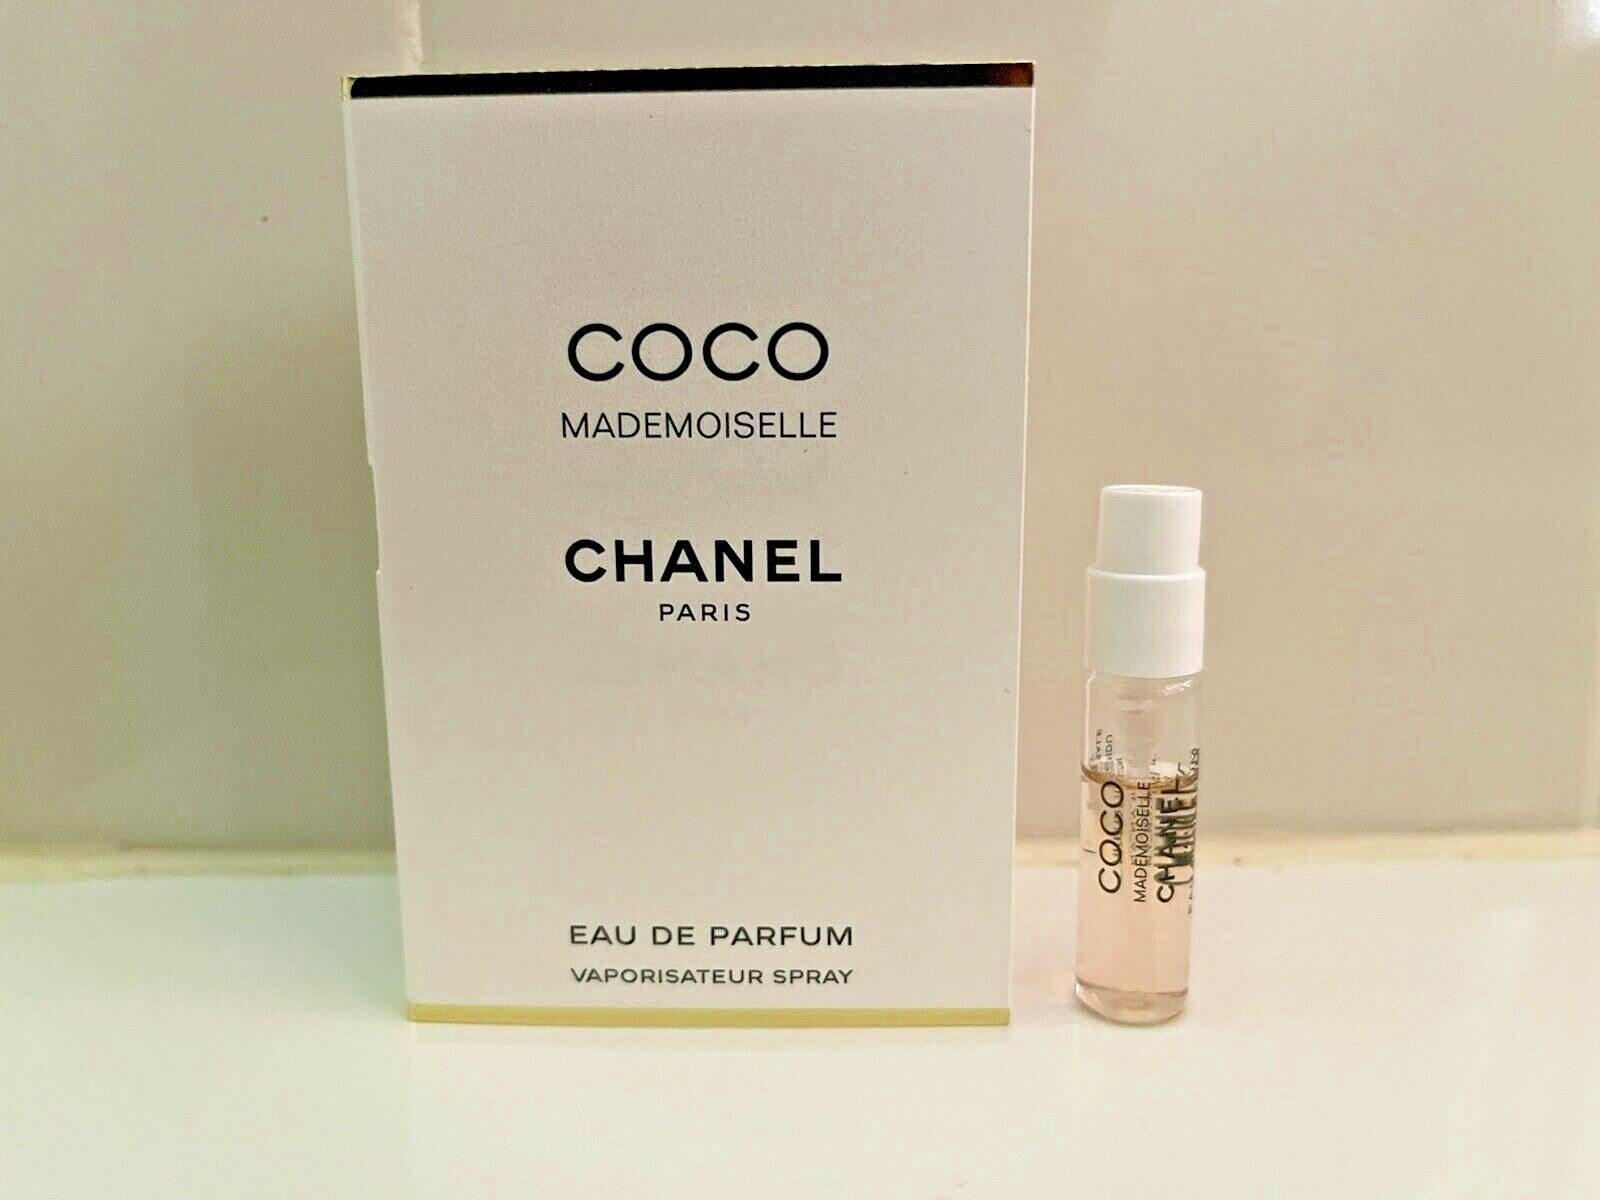 Chanel Coco Mademoiselle Eau de Parfum Sample Spray Vial 1.5ml/0.05oz L@@K!